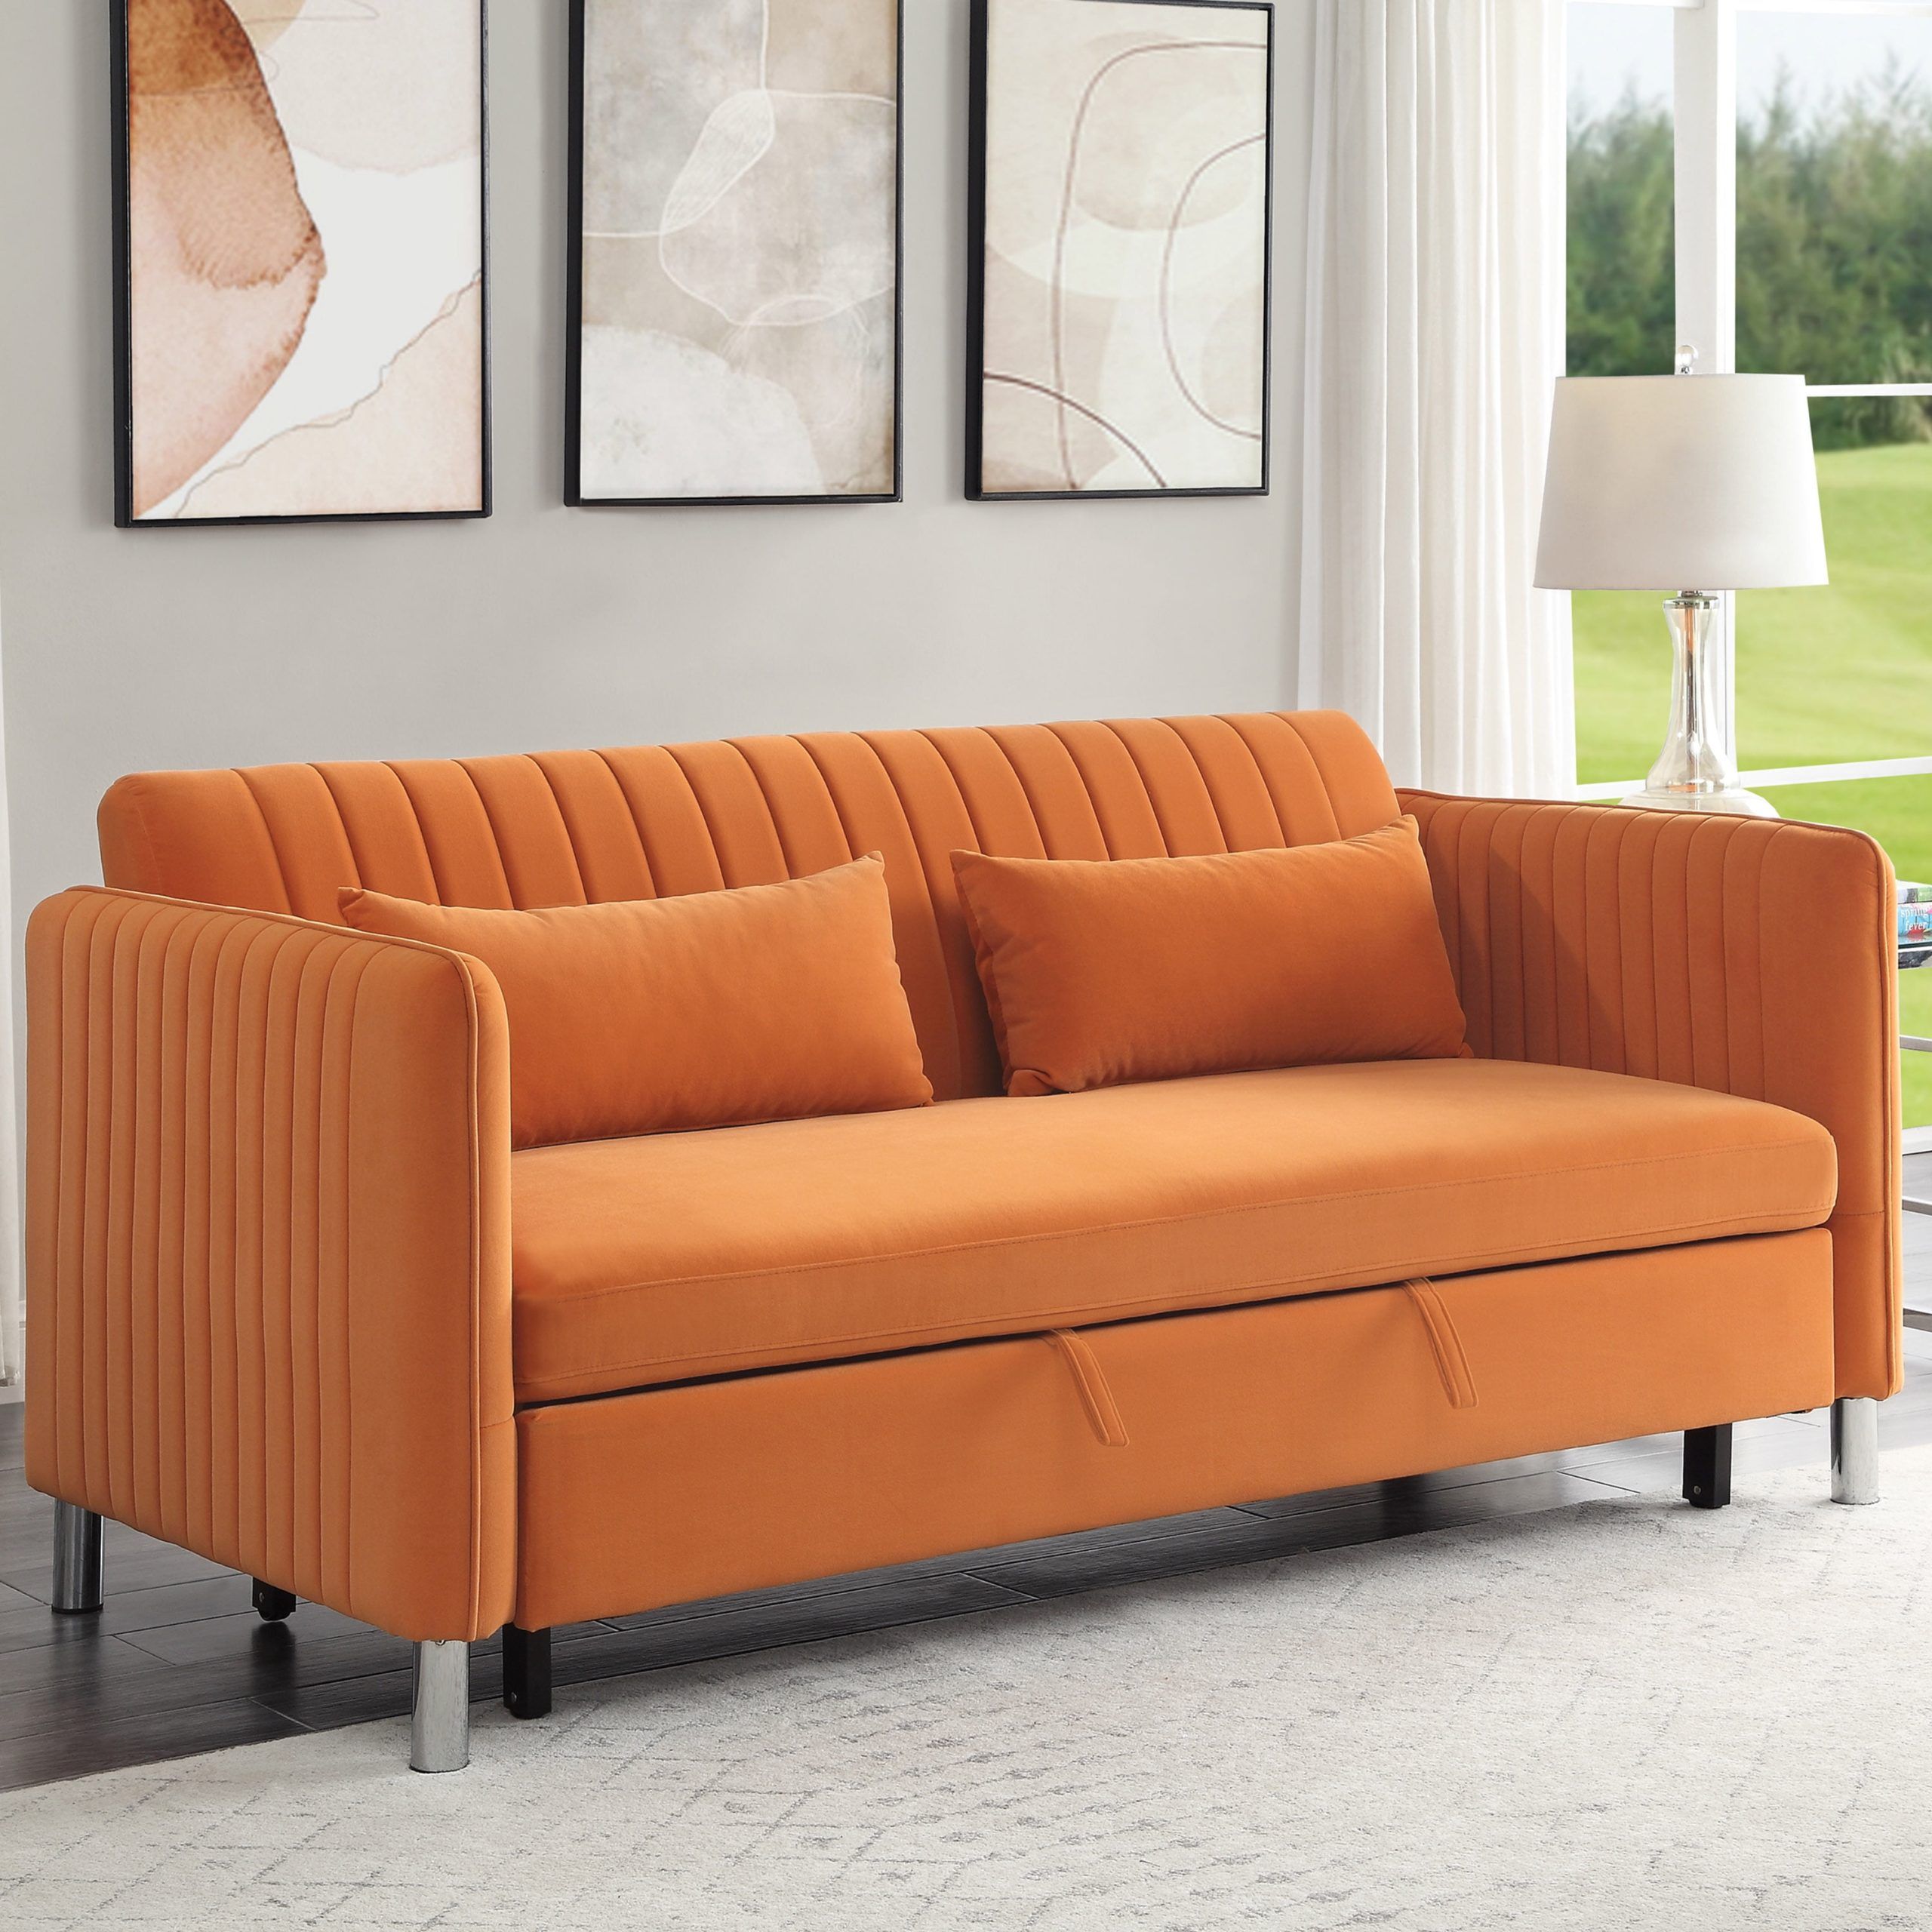 Lexiconhome Greenway Velvet Convertible Sofa Bed, Orange – Walmart Throughout 66" Convertible Velvet Sofa Beds (Gallery 5 of 20)